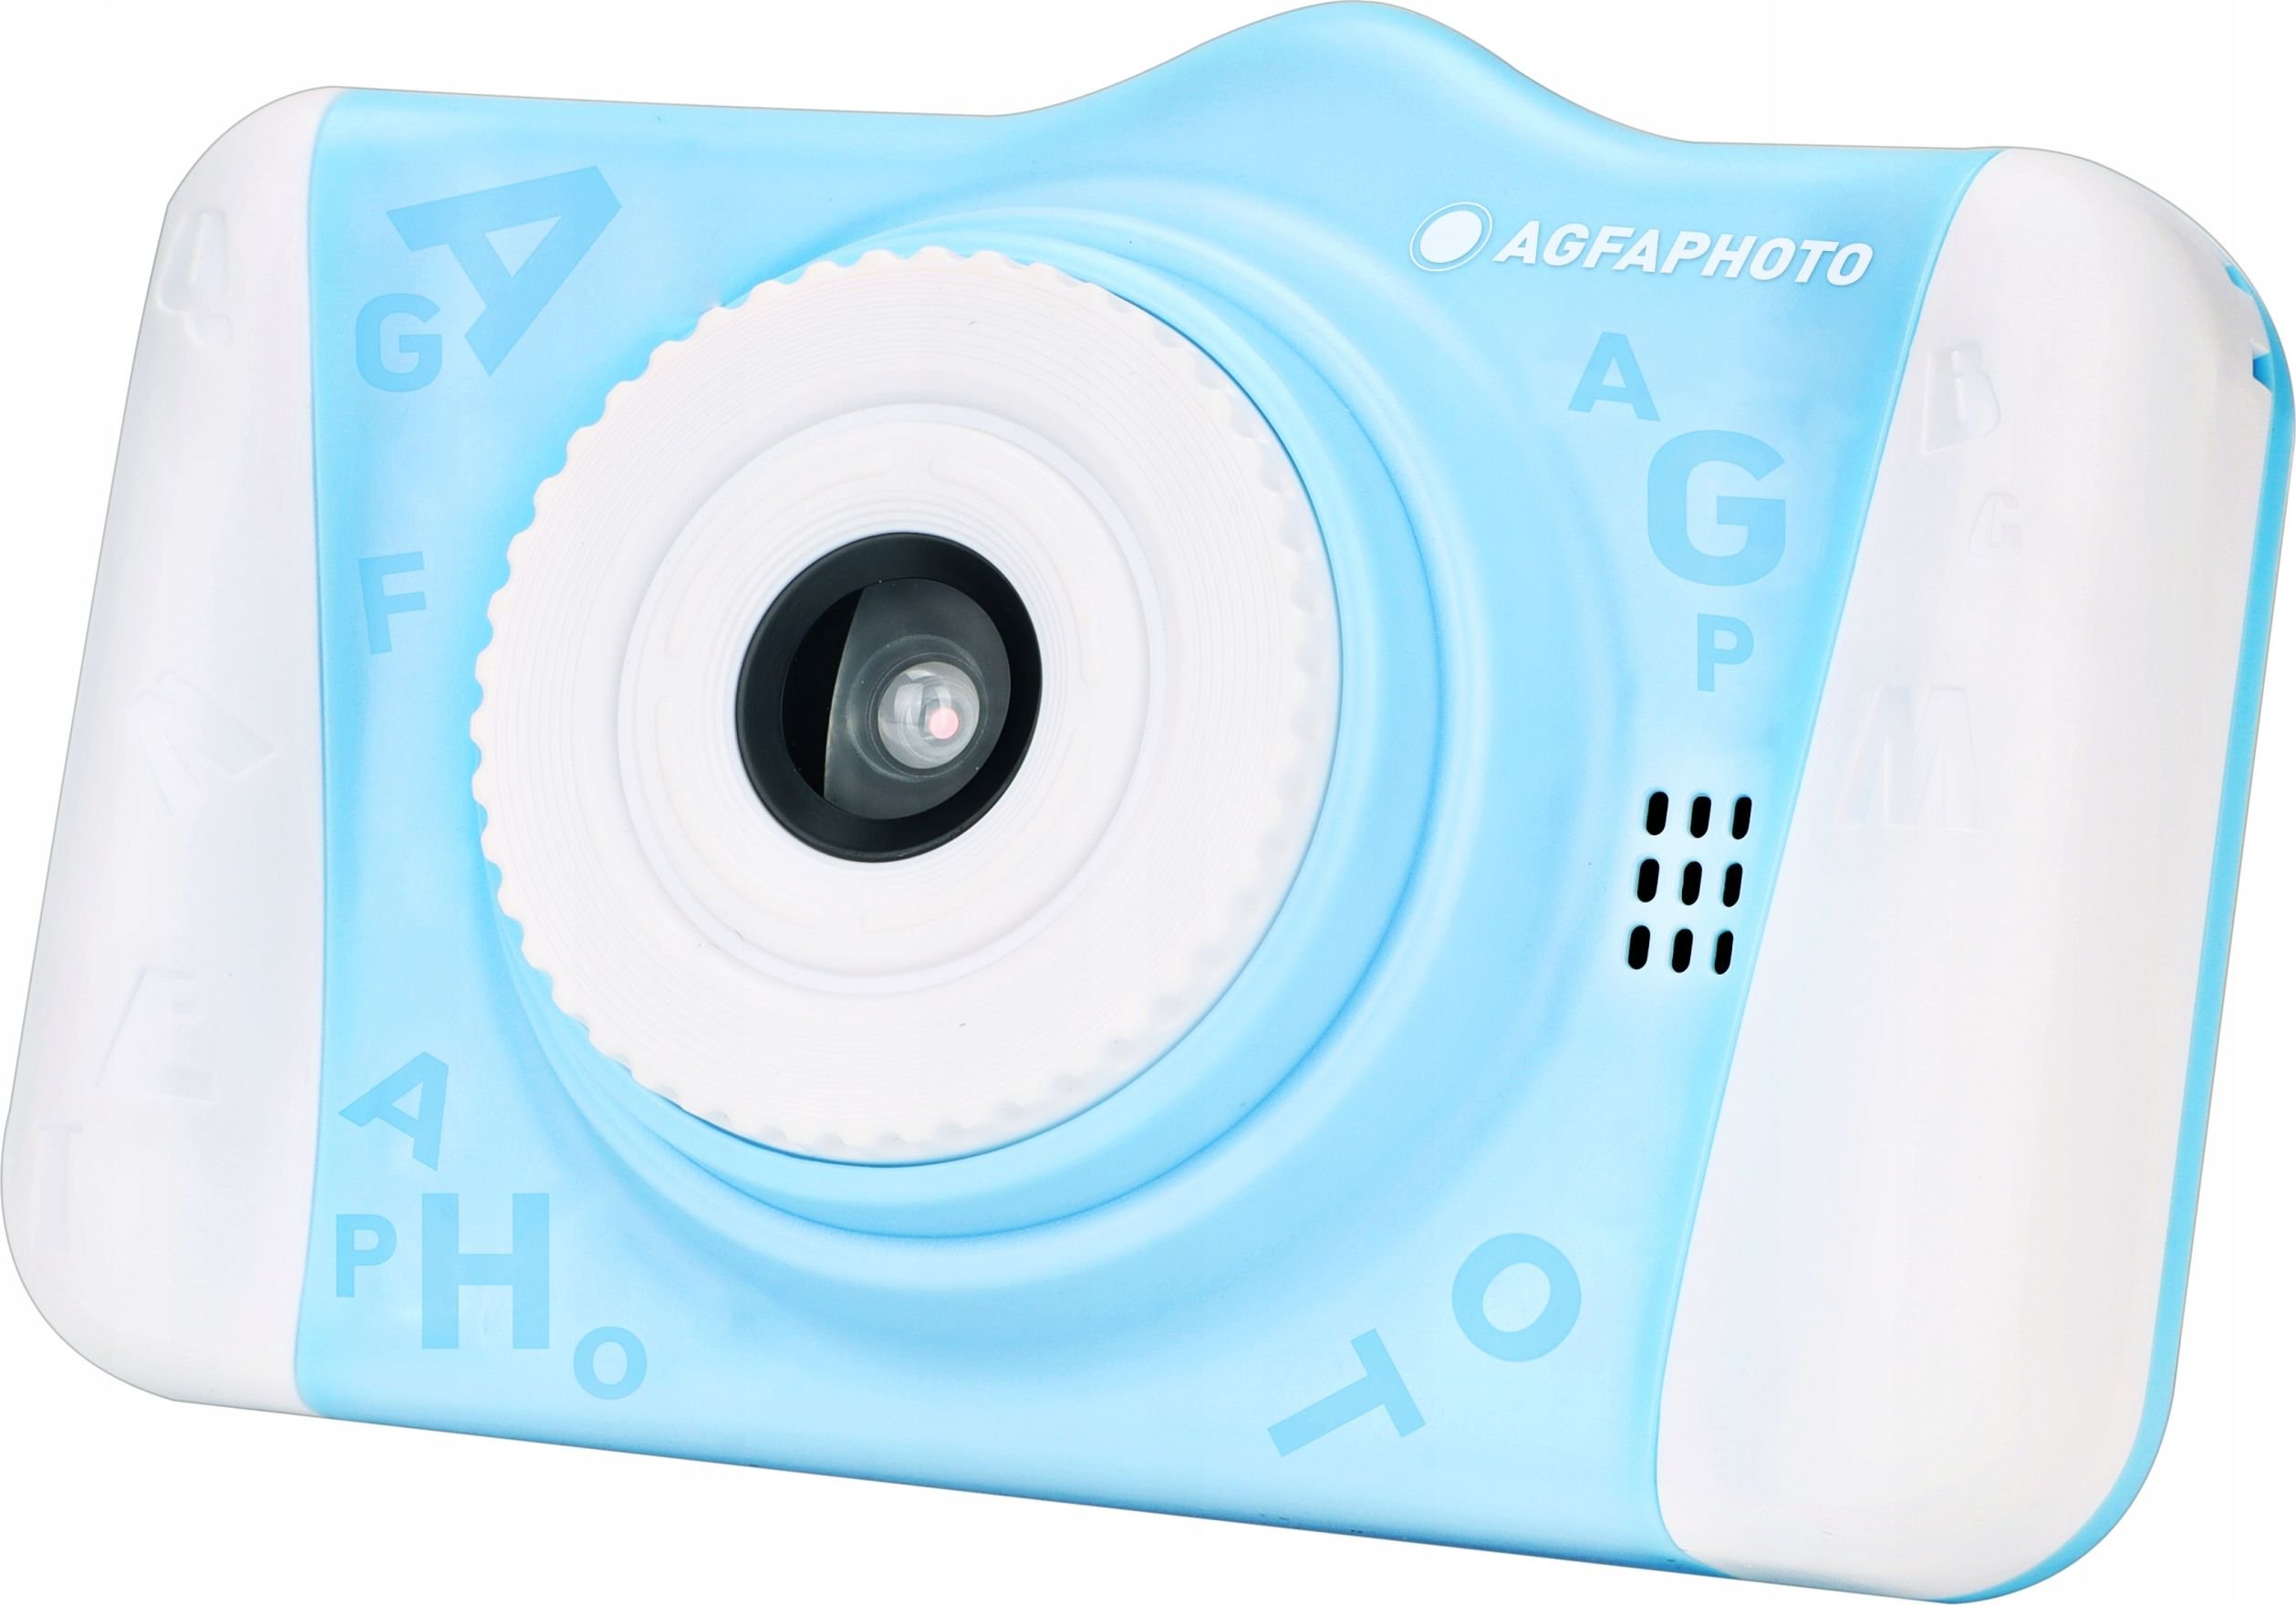 Aparat foto digital compact cu o camera video pentru copii Agfa, Albastru